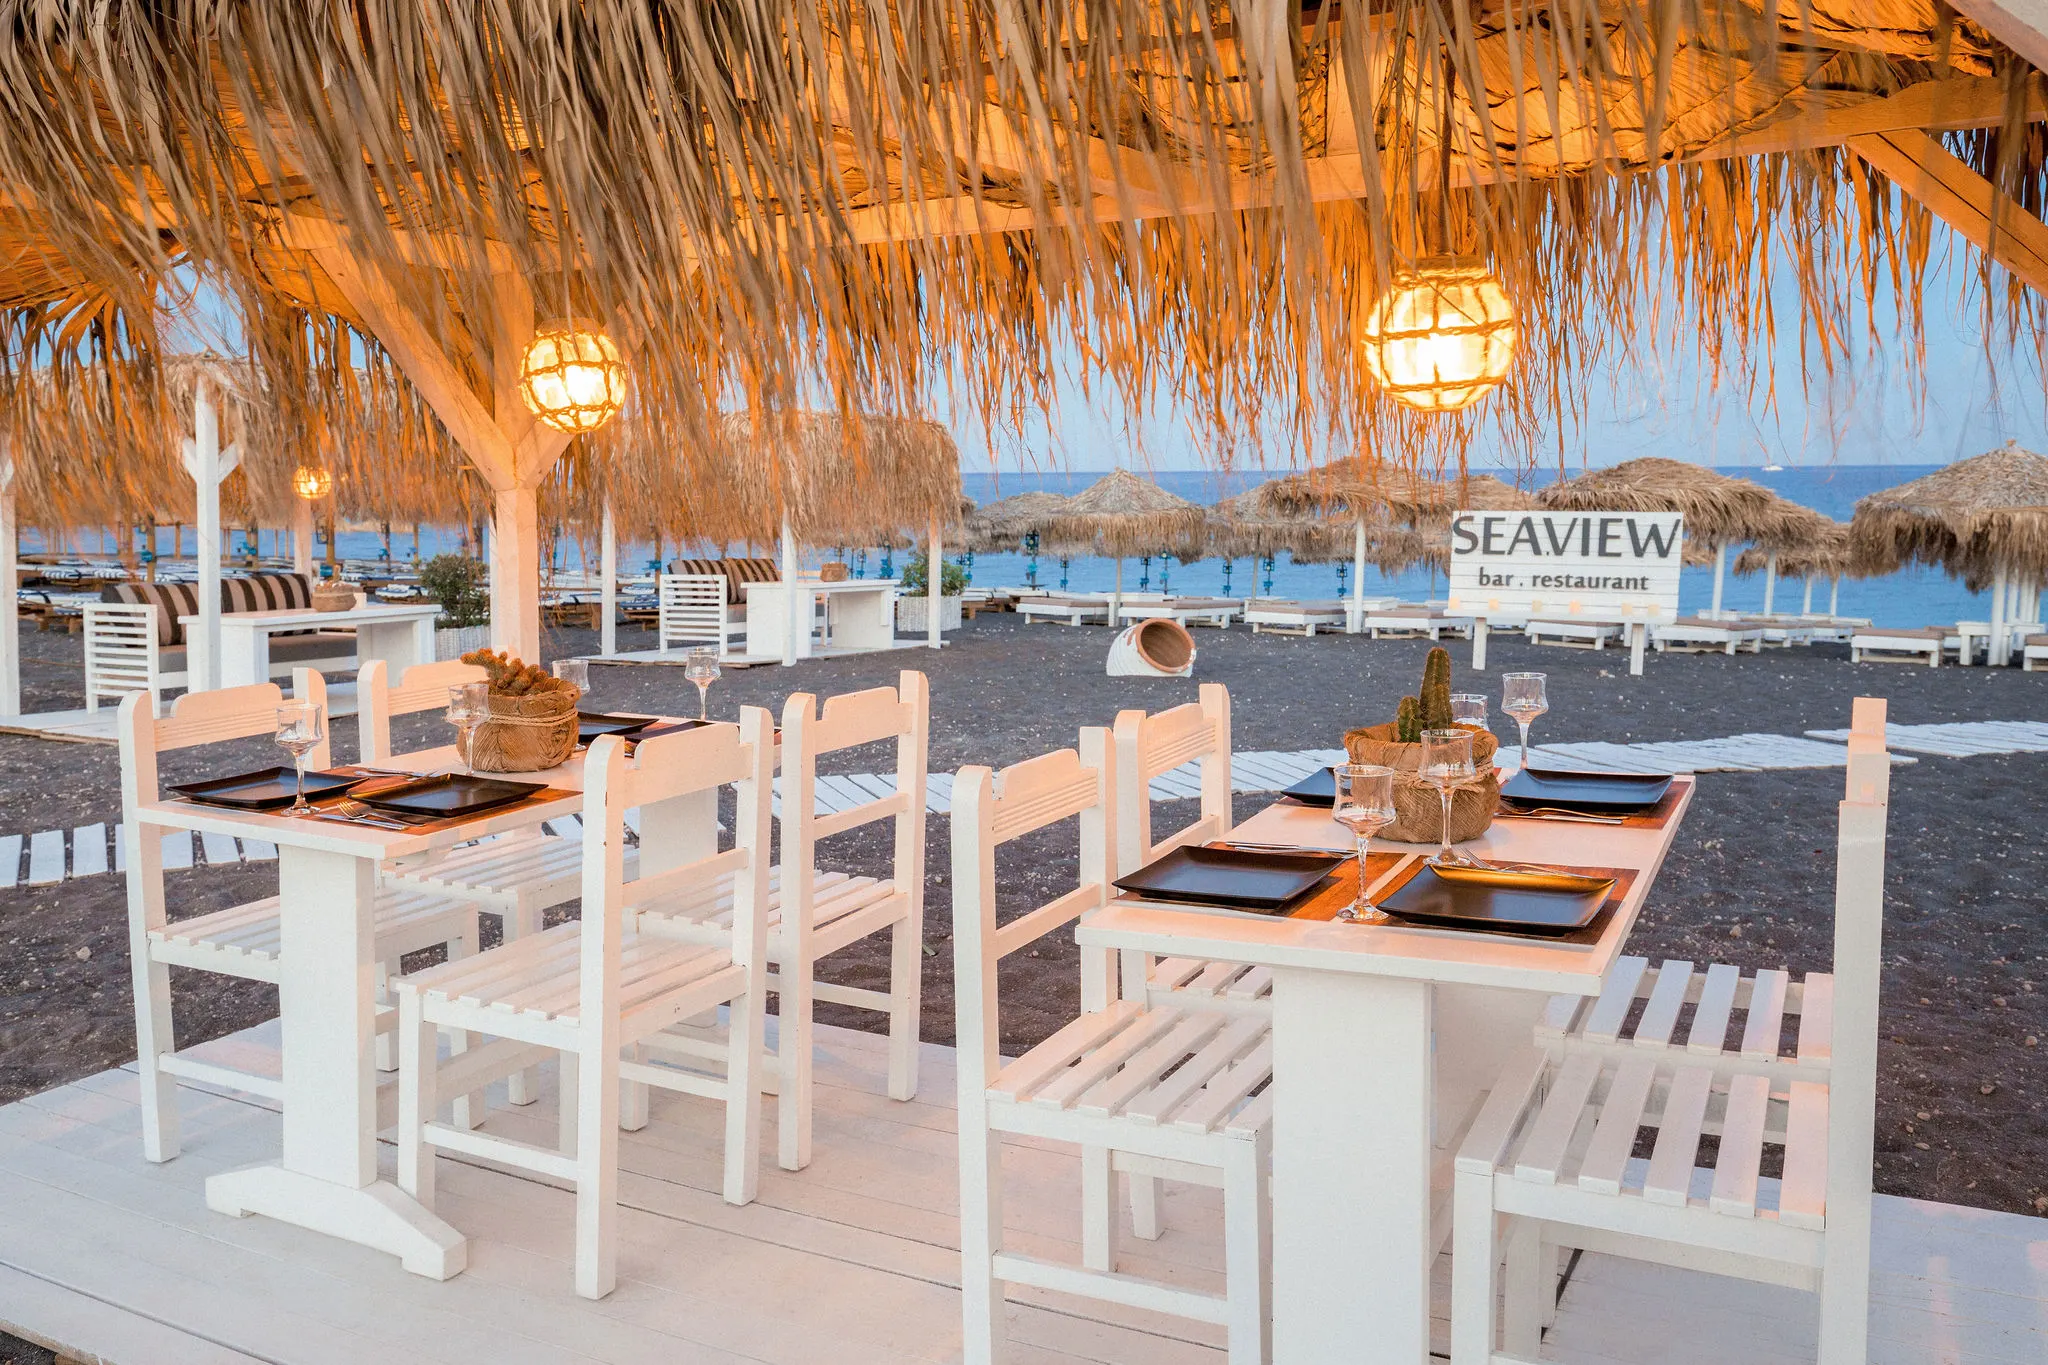 Seaview Santorini, one of the best restaurants in Santorini, pictured in the evening